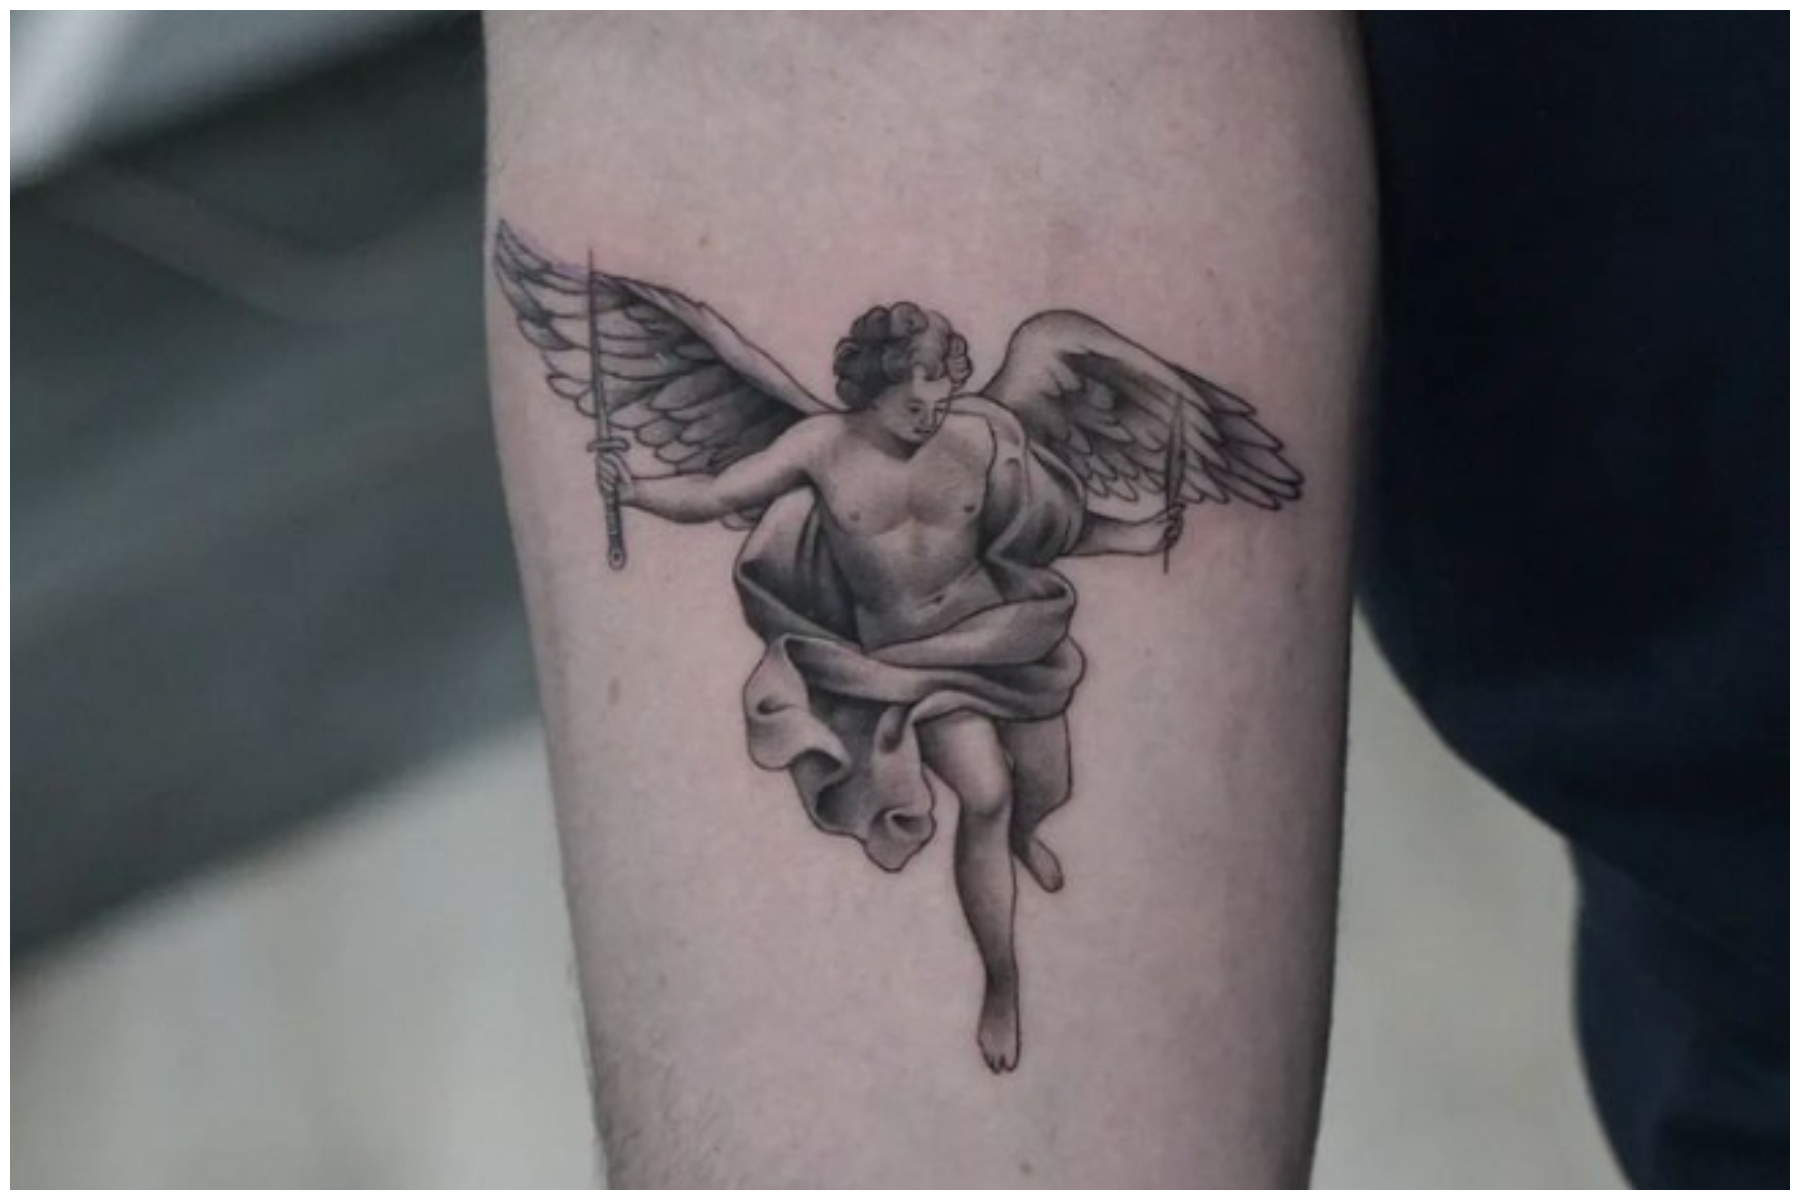 Little Angel Kids and King tattoo sleeve - Best Tattoo Ideas Gallery